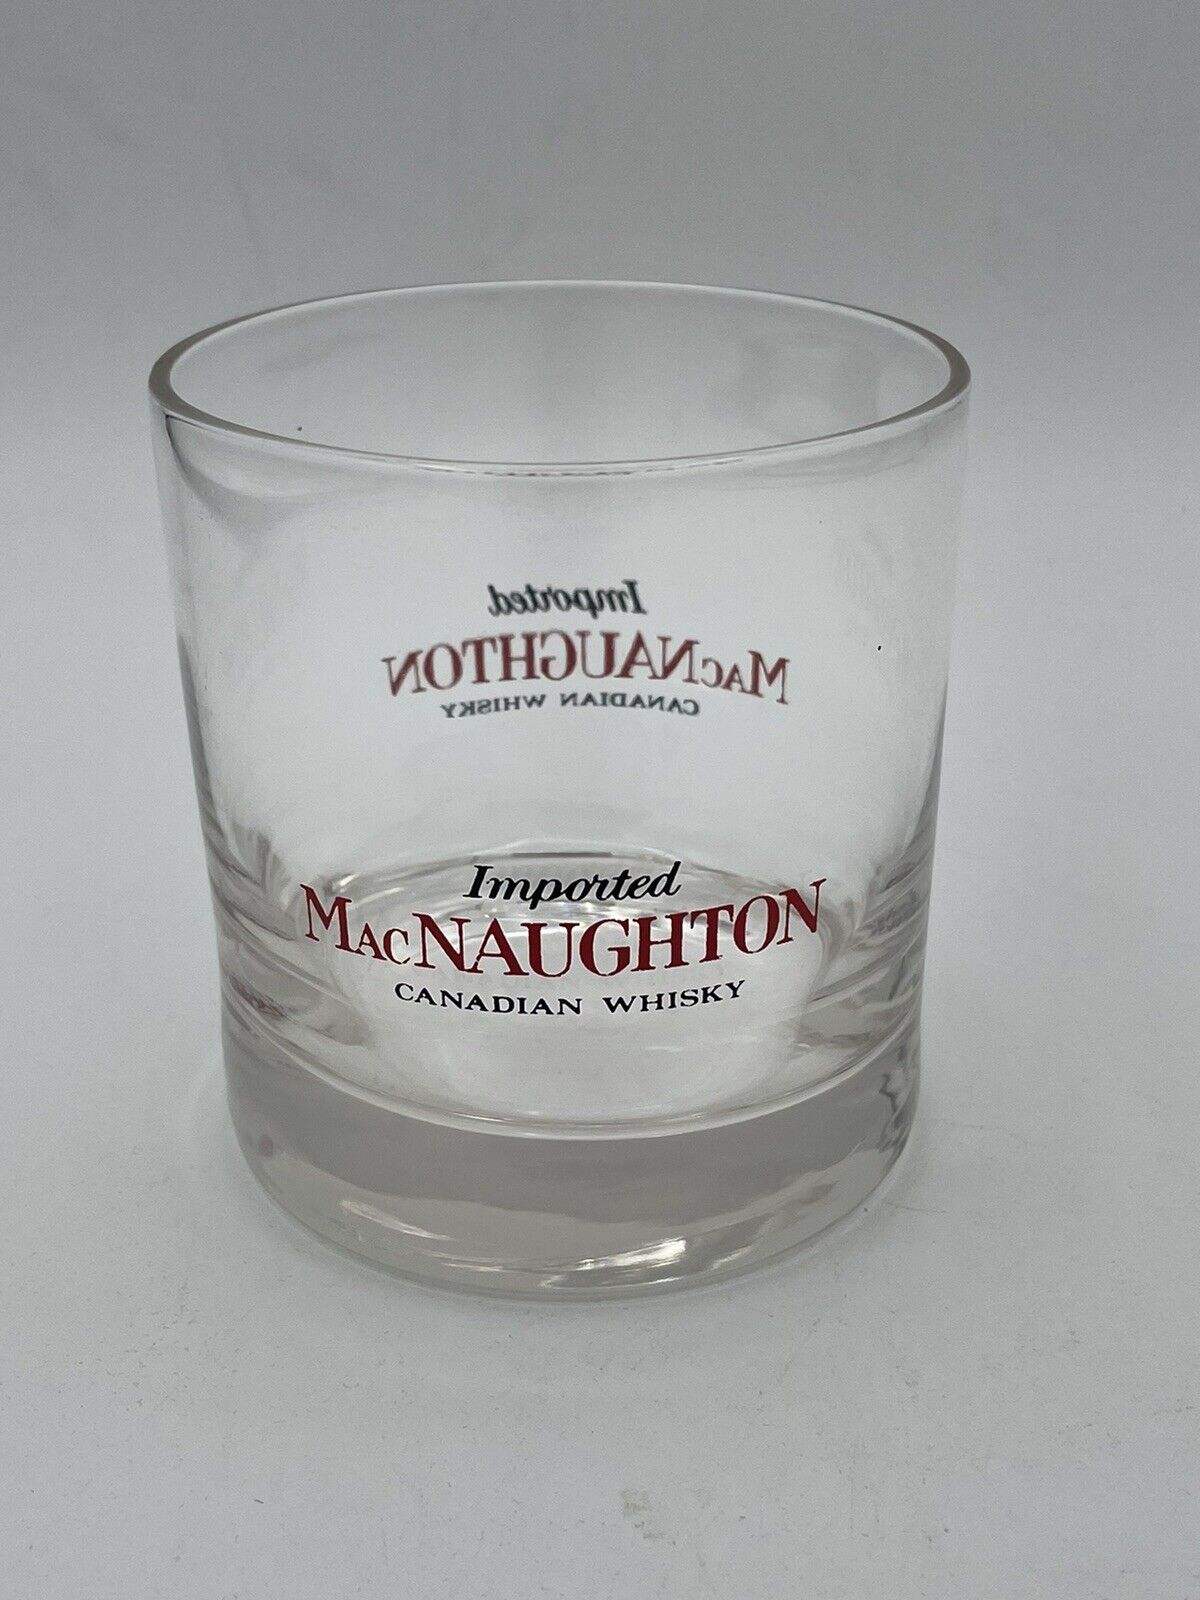 VINTAGE MacNAUGHTON IMPORTED CANADIAN WHISKY GLASS